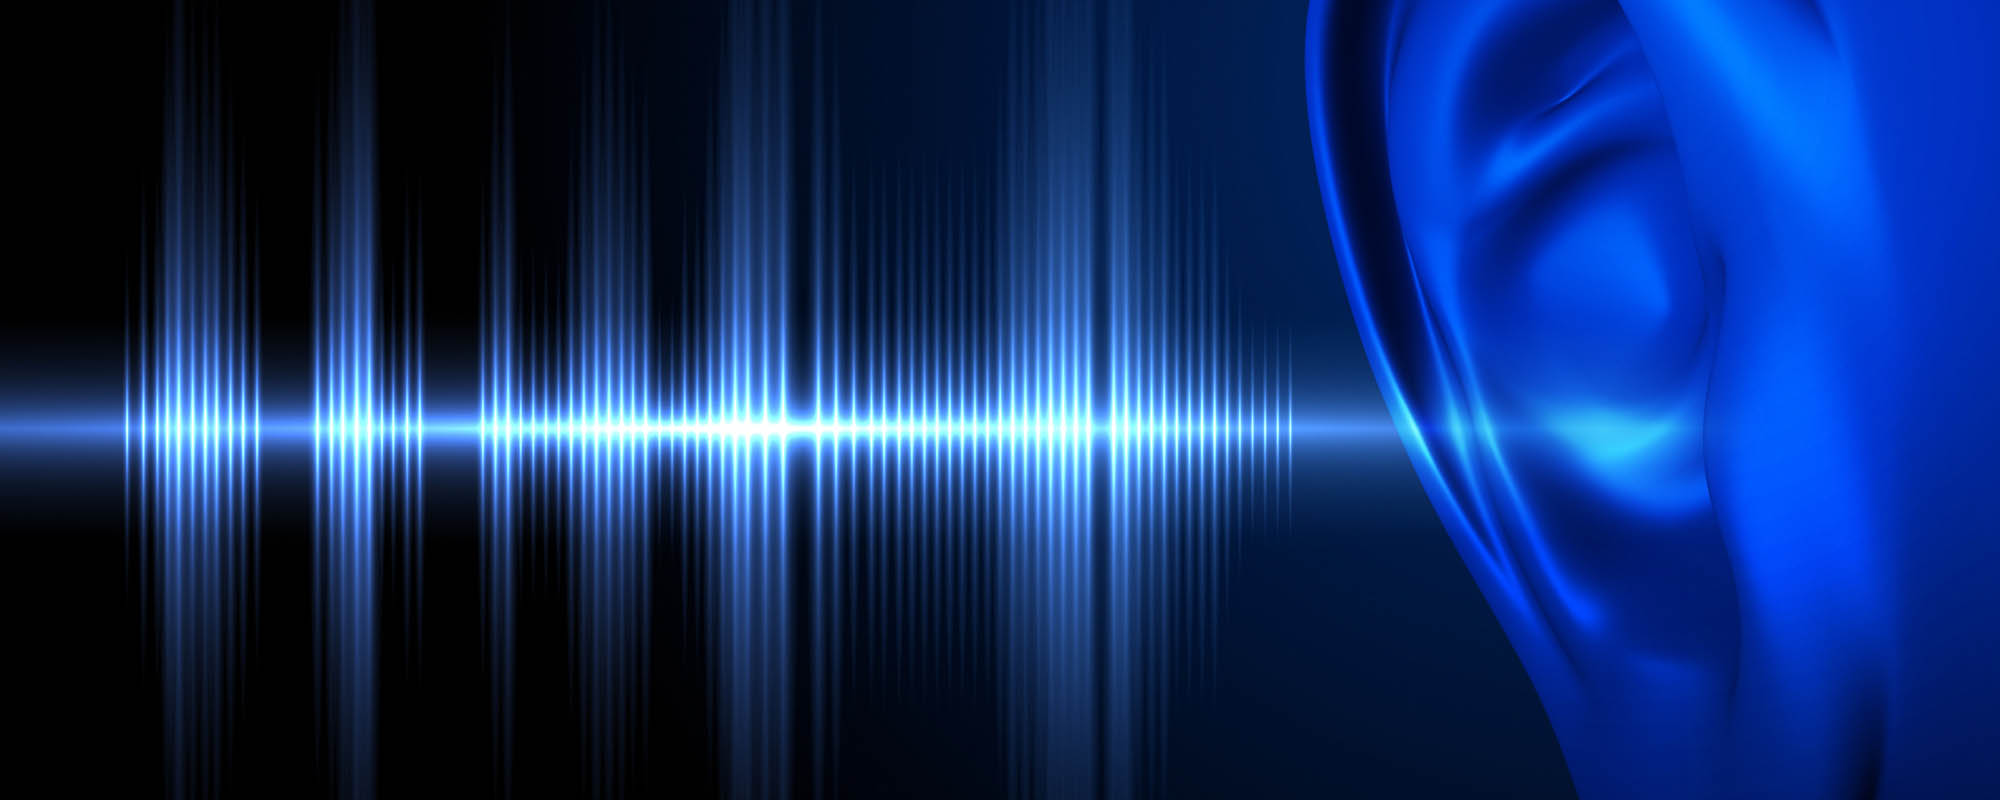 Illustration of sound waves entering the ear